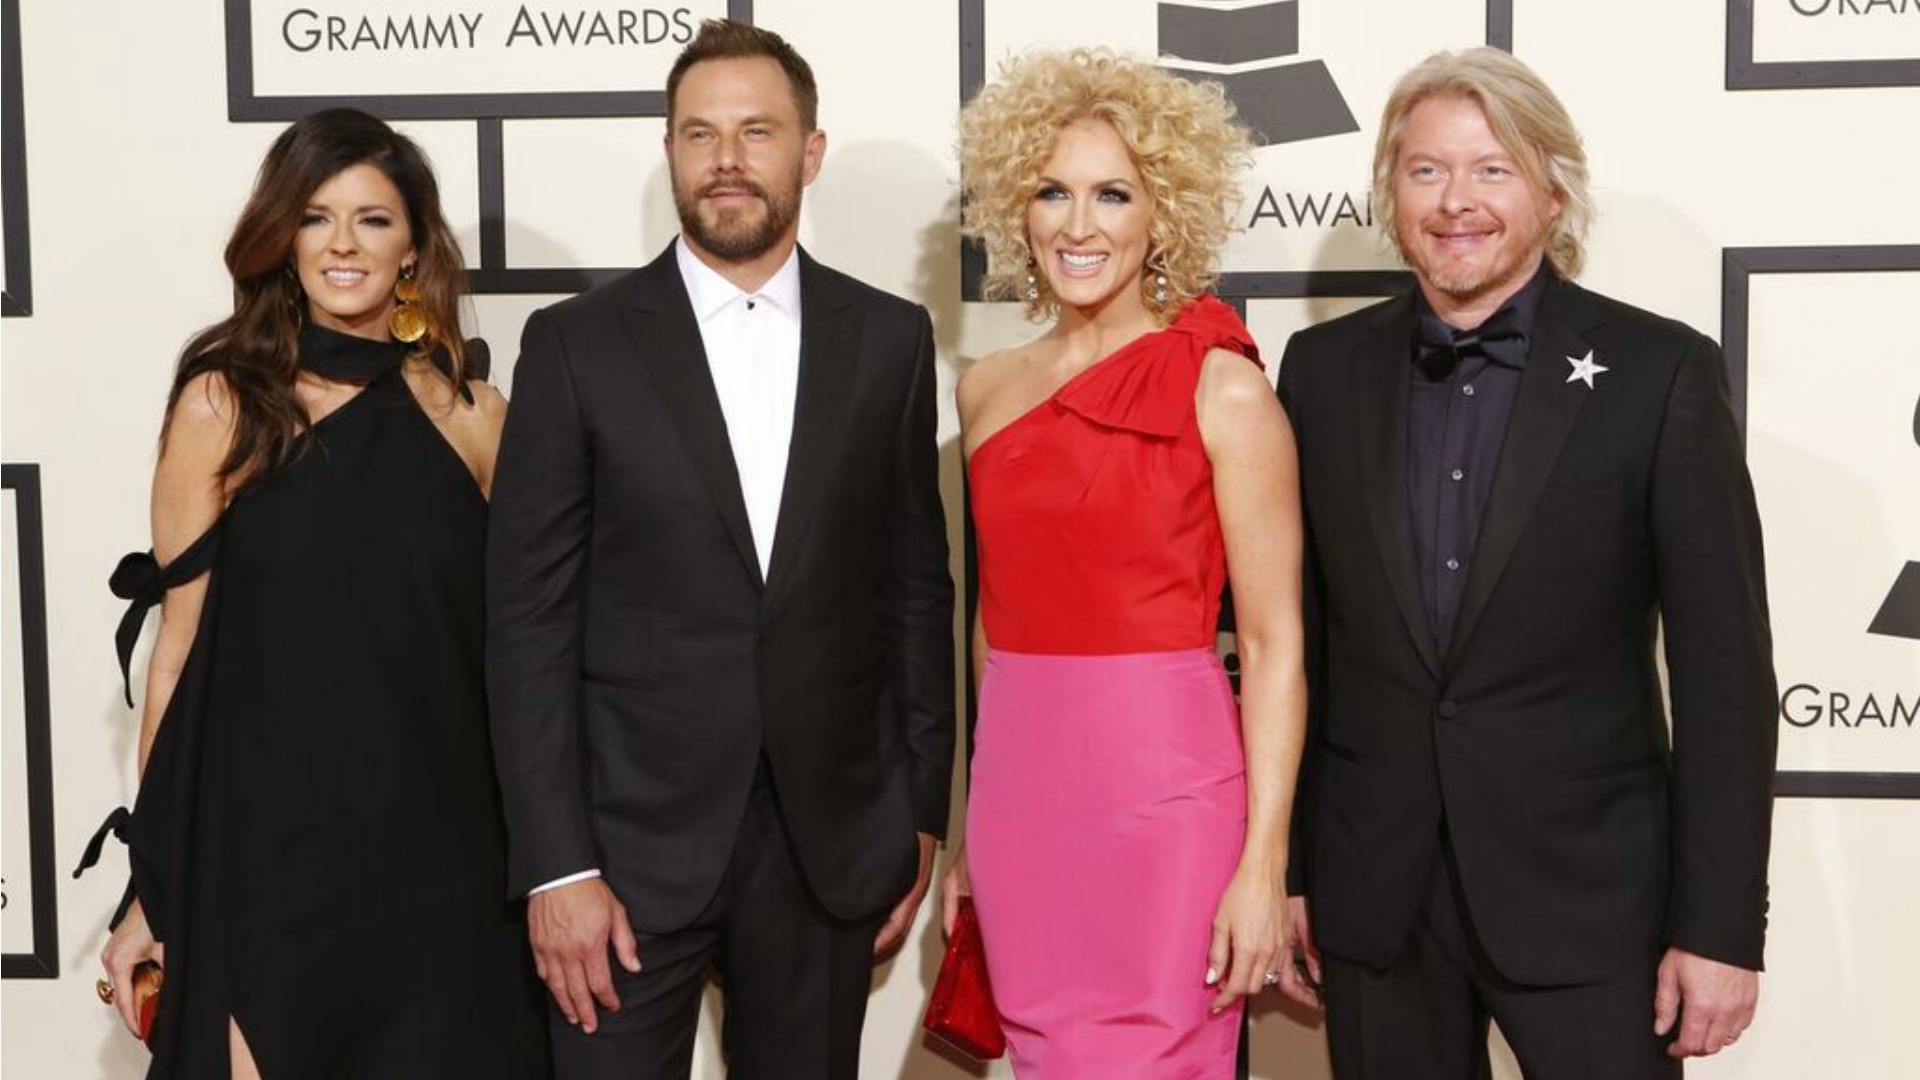 Country Stars Shine At 2016 GRAMMY Awards - GRAMMY Awards Photos - CBS.com